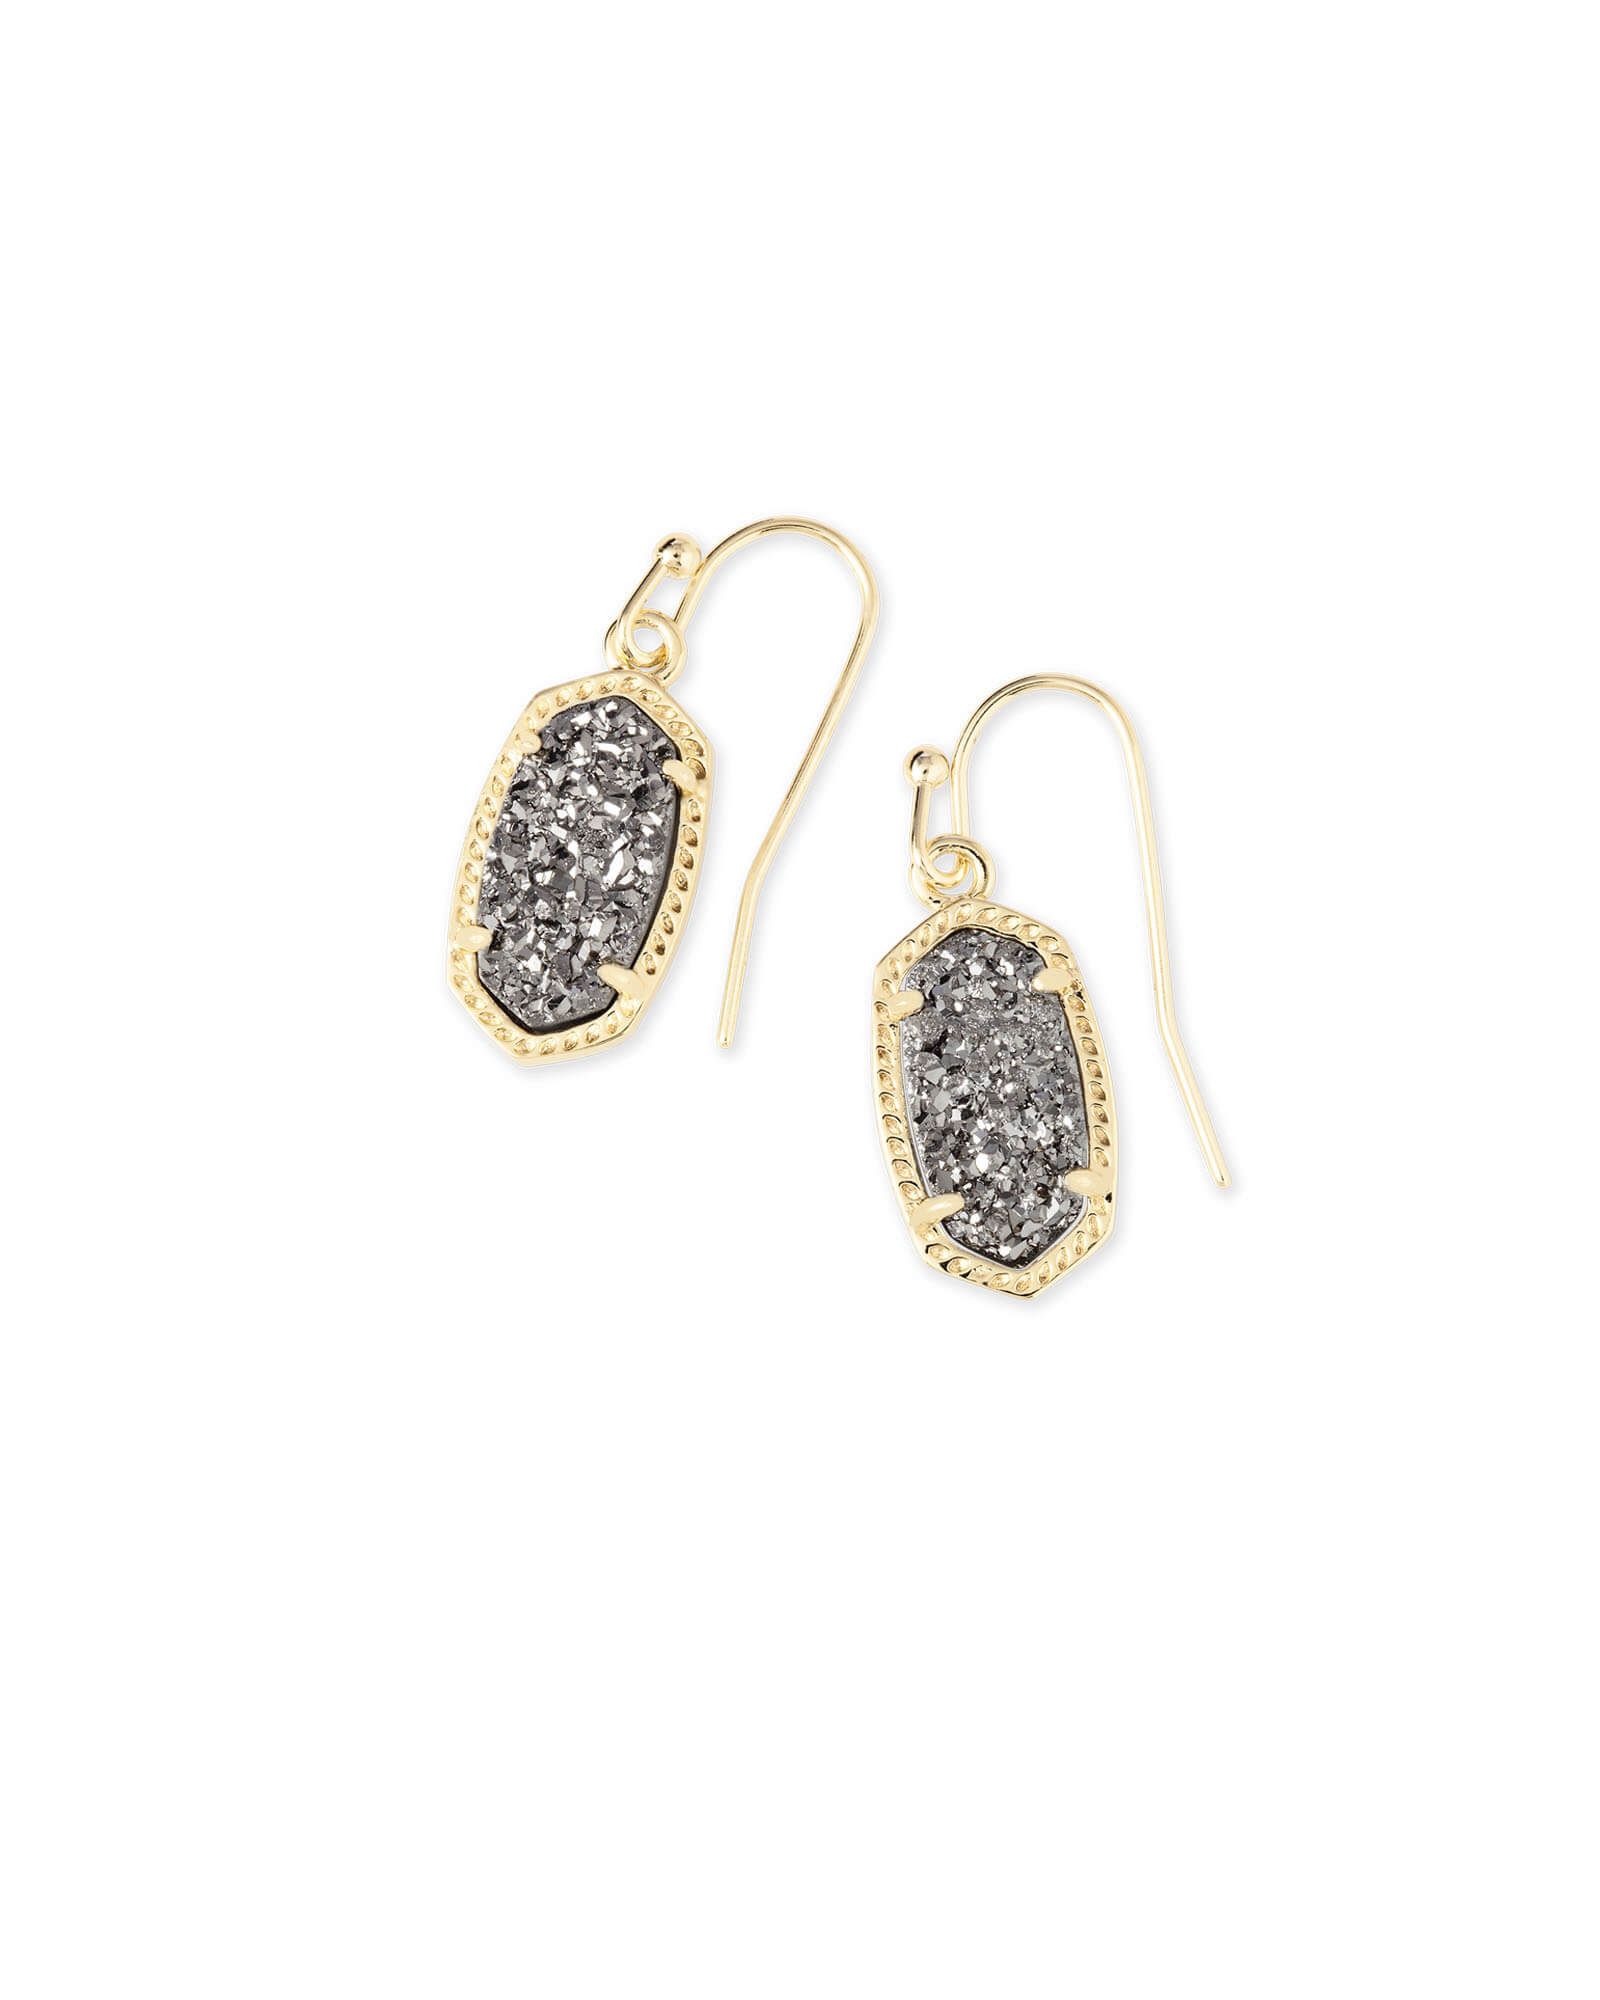 Lee Gold Drop Earrings in Platinum Drusy | Kendra Scott